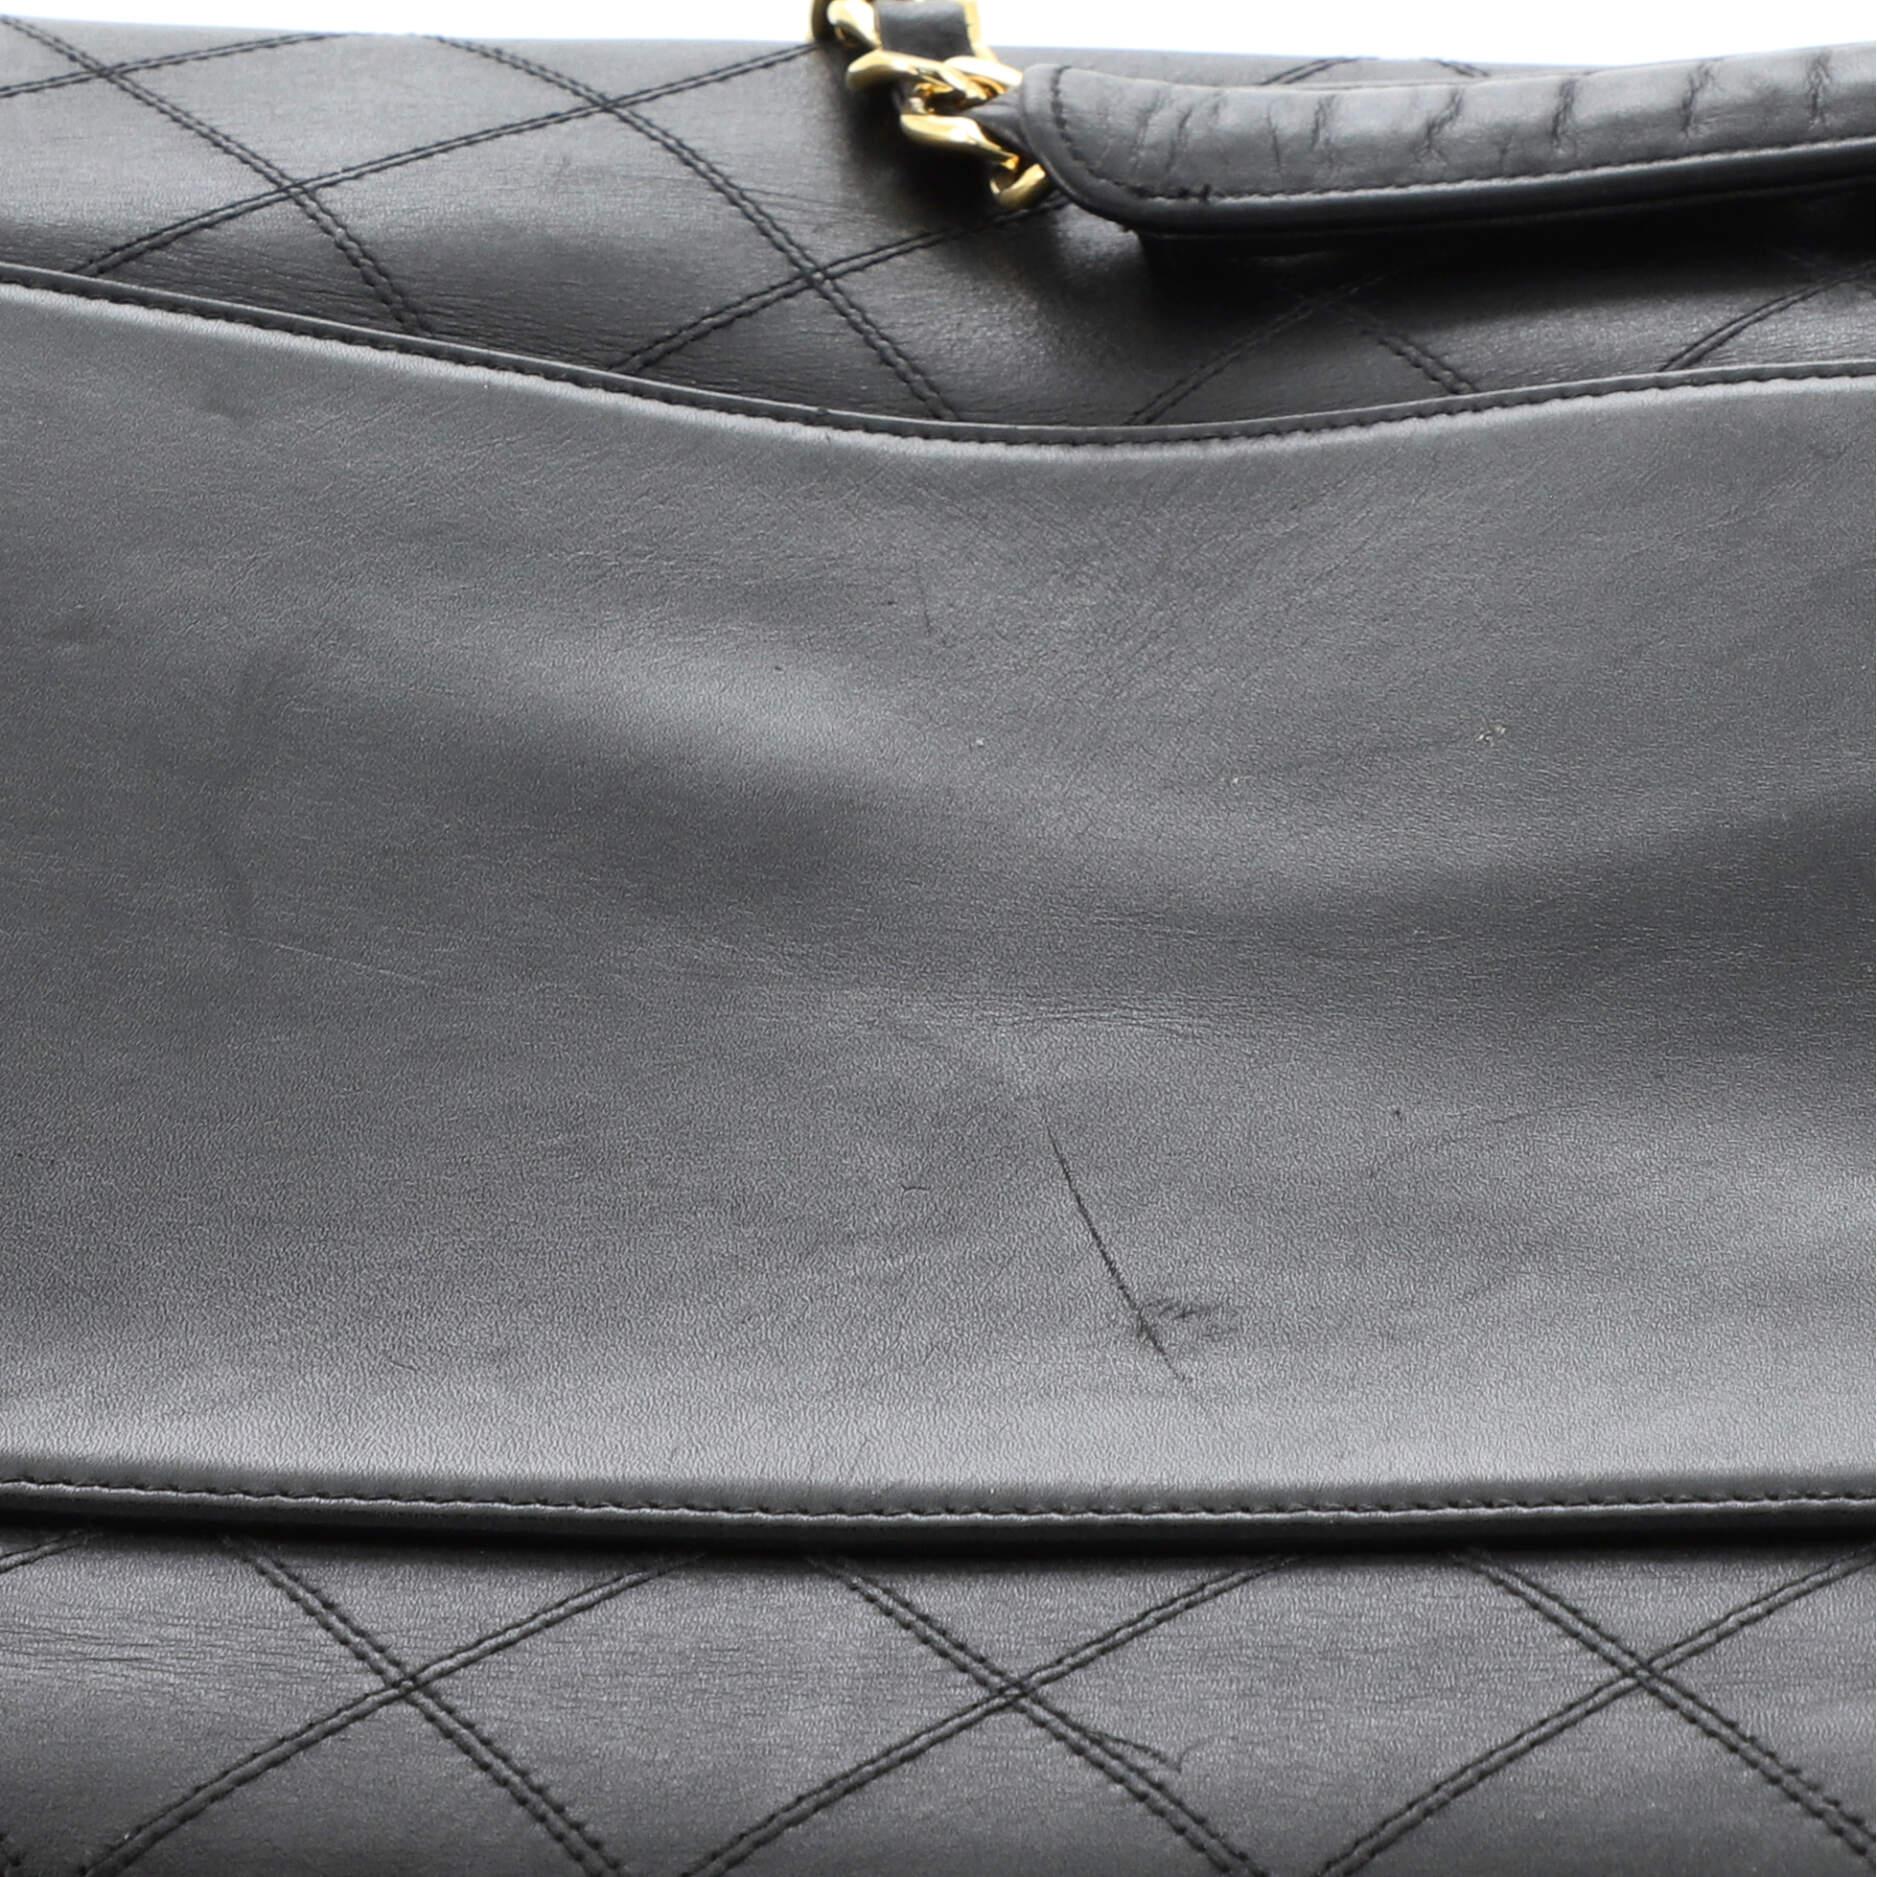 Women's or Men's Chanel Vintage Supermodel Weekender Bag Quilted Leather Large